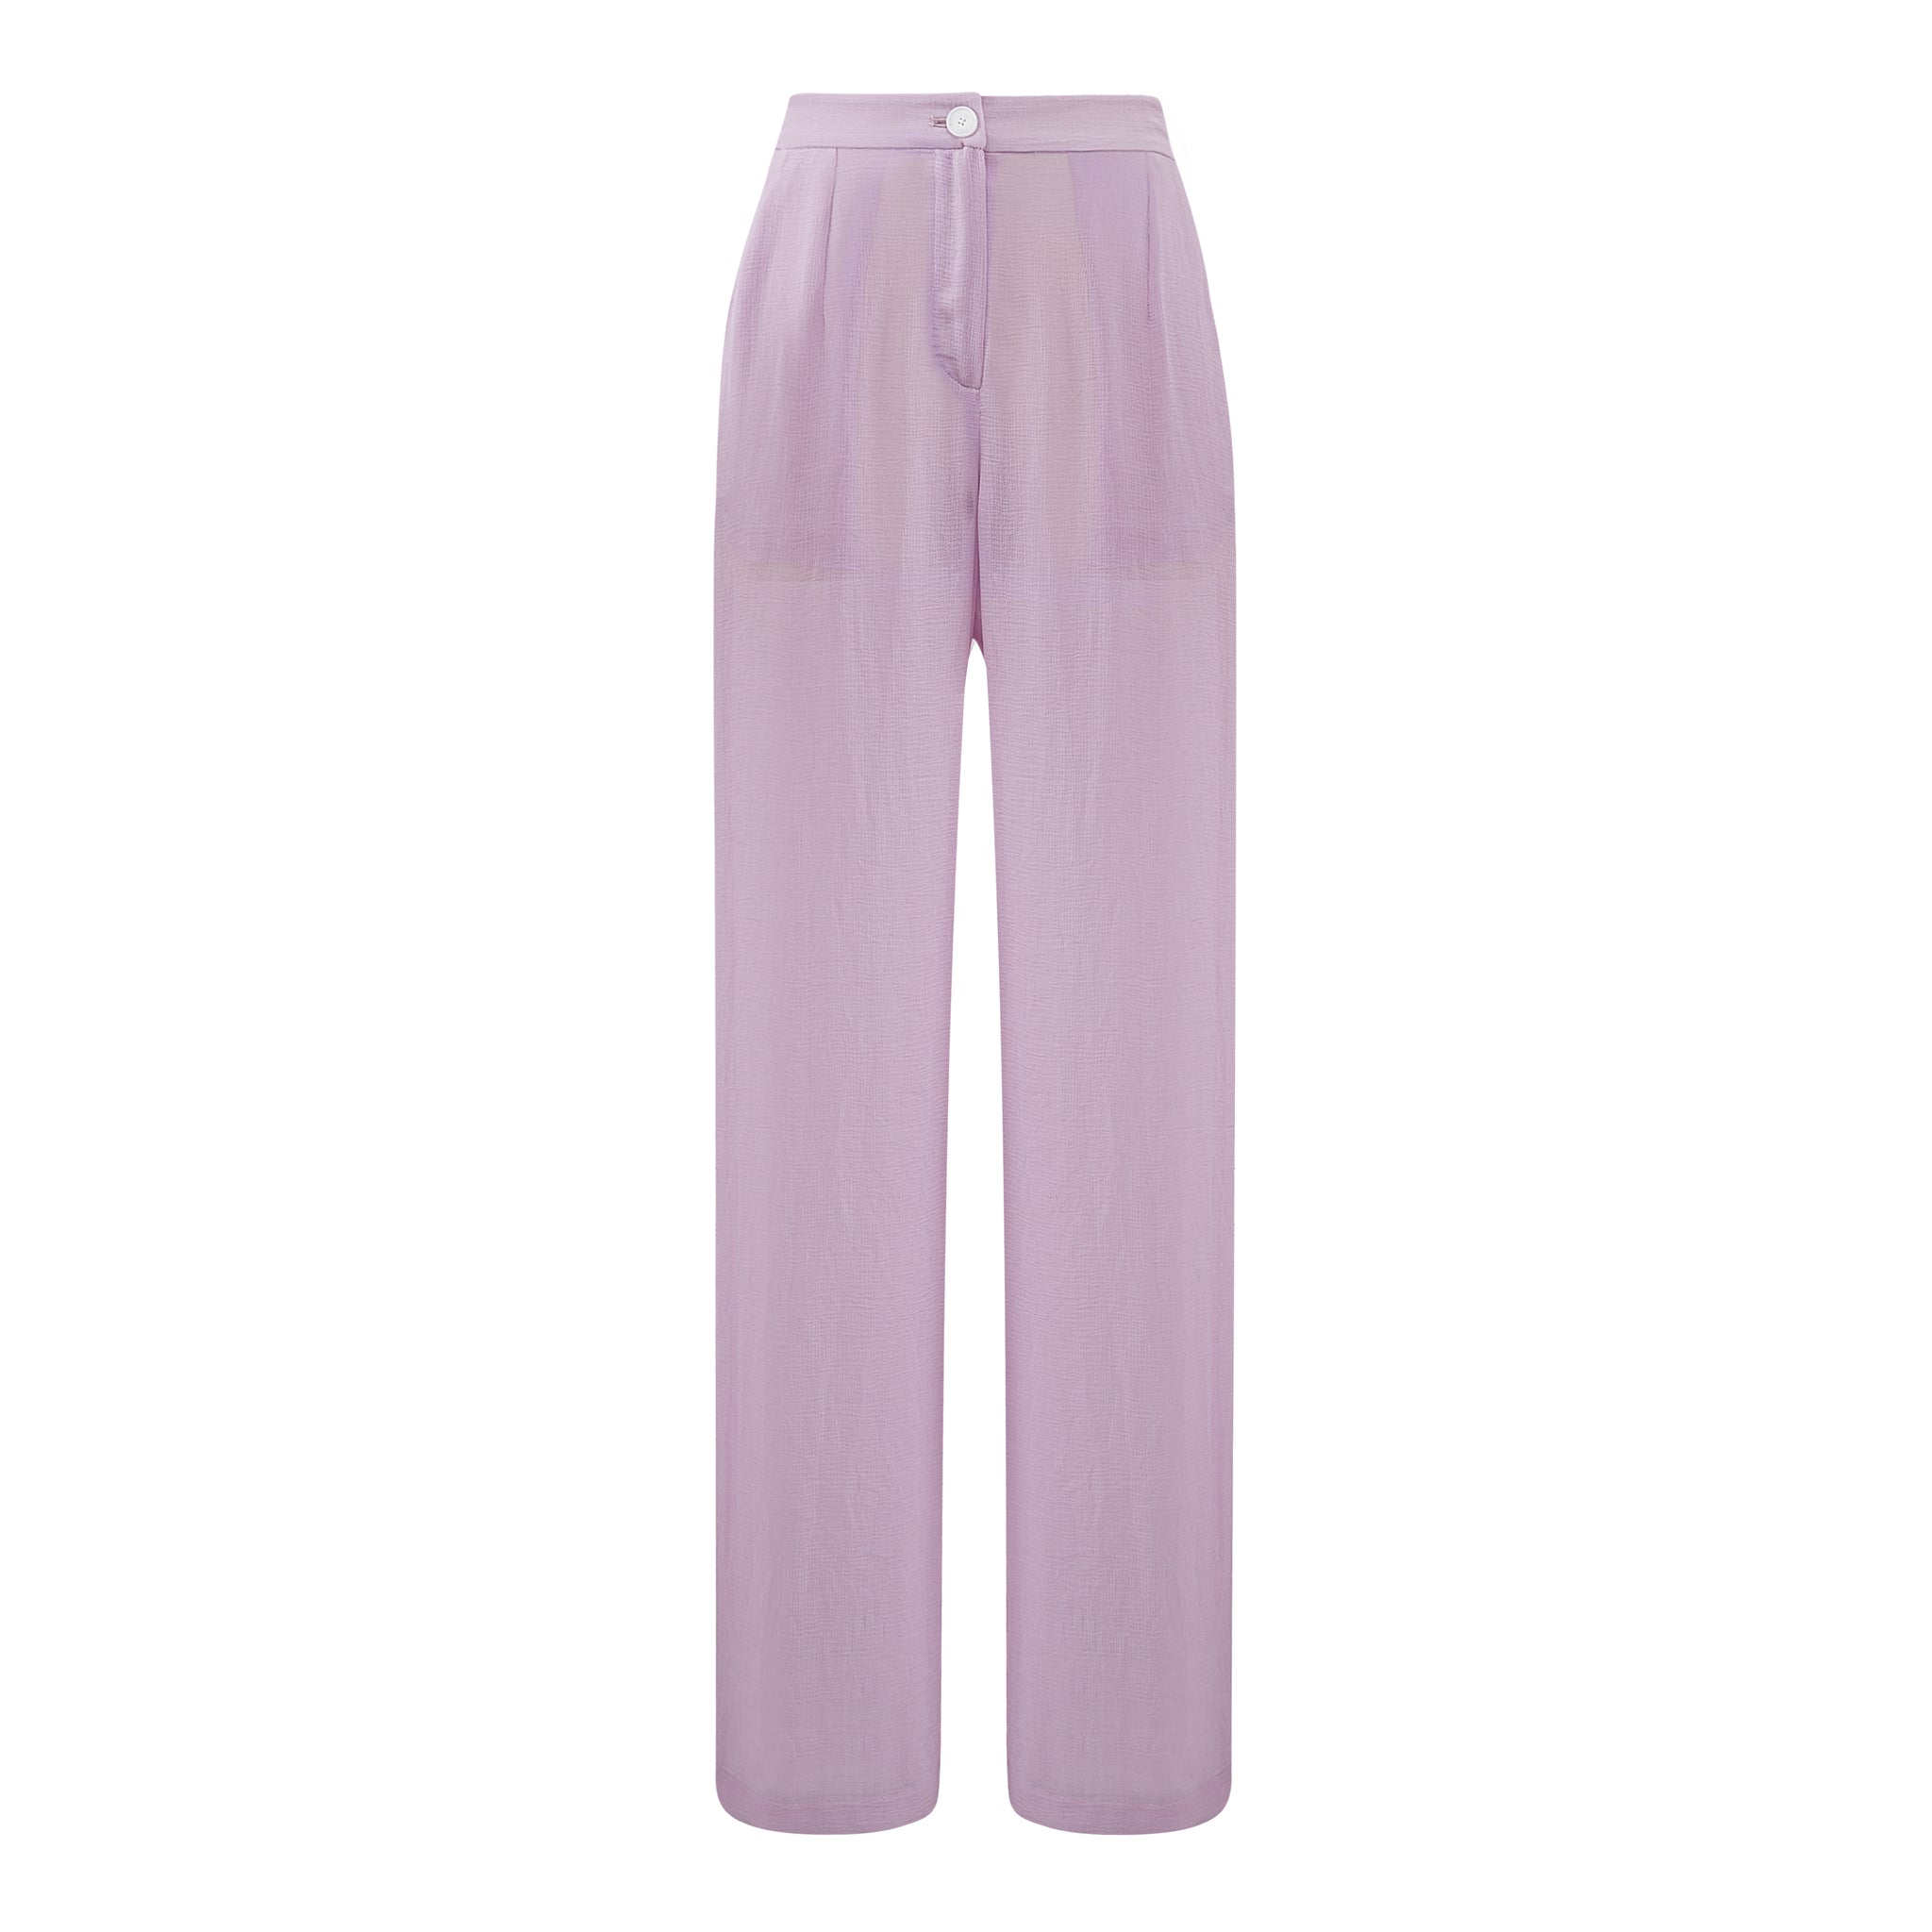 Lilac straight leg trouser in crinkle chiffon.